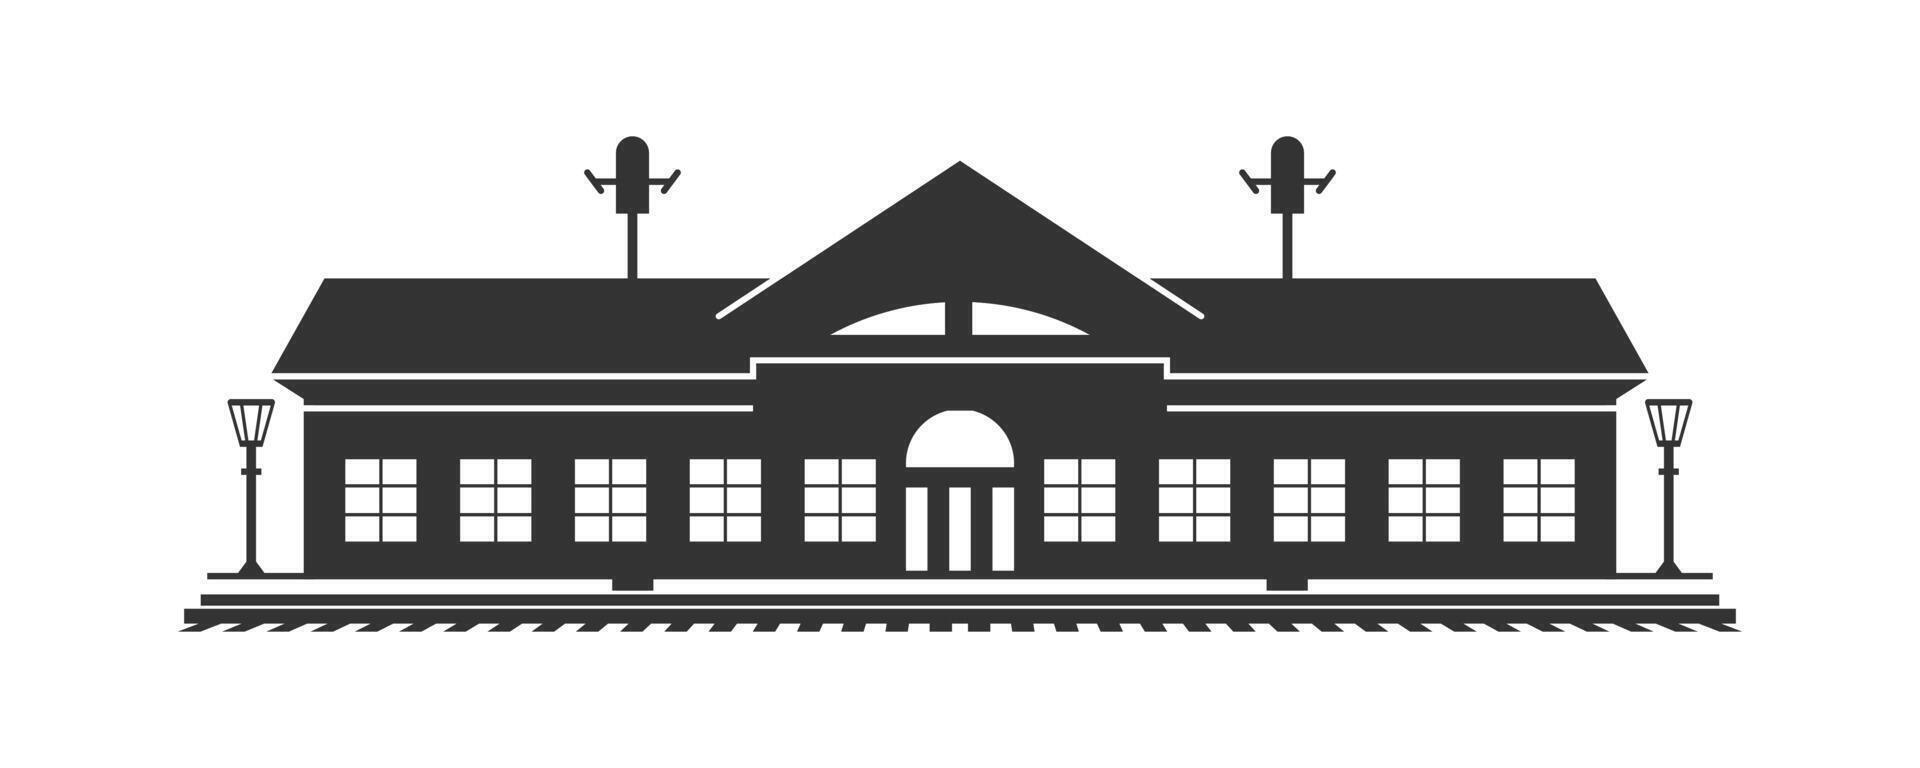 ferrocarril estación silueta. vector ilustración.